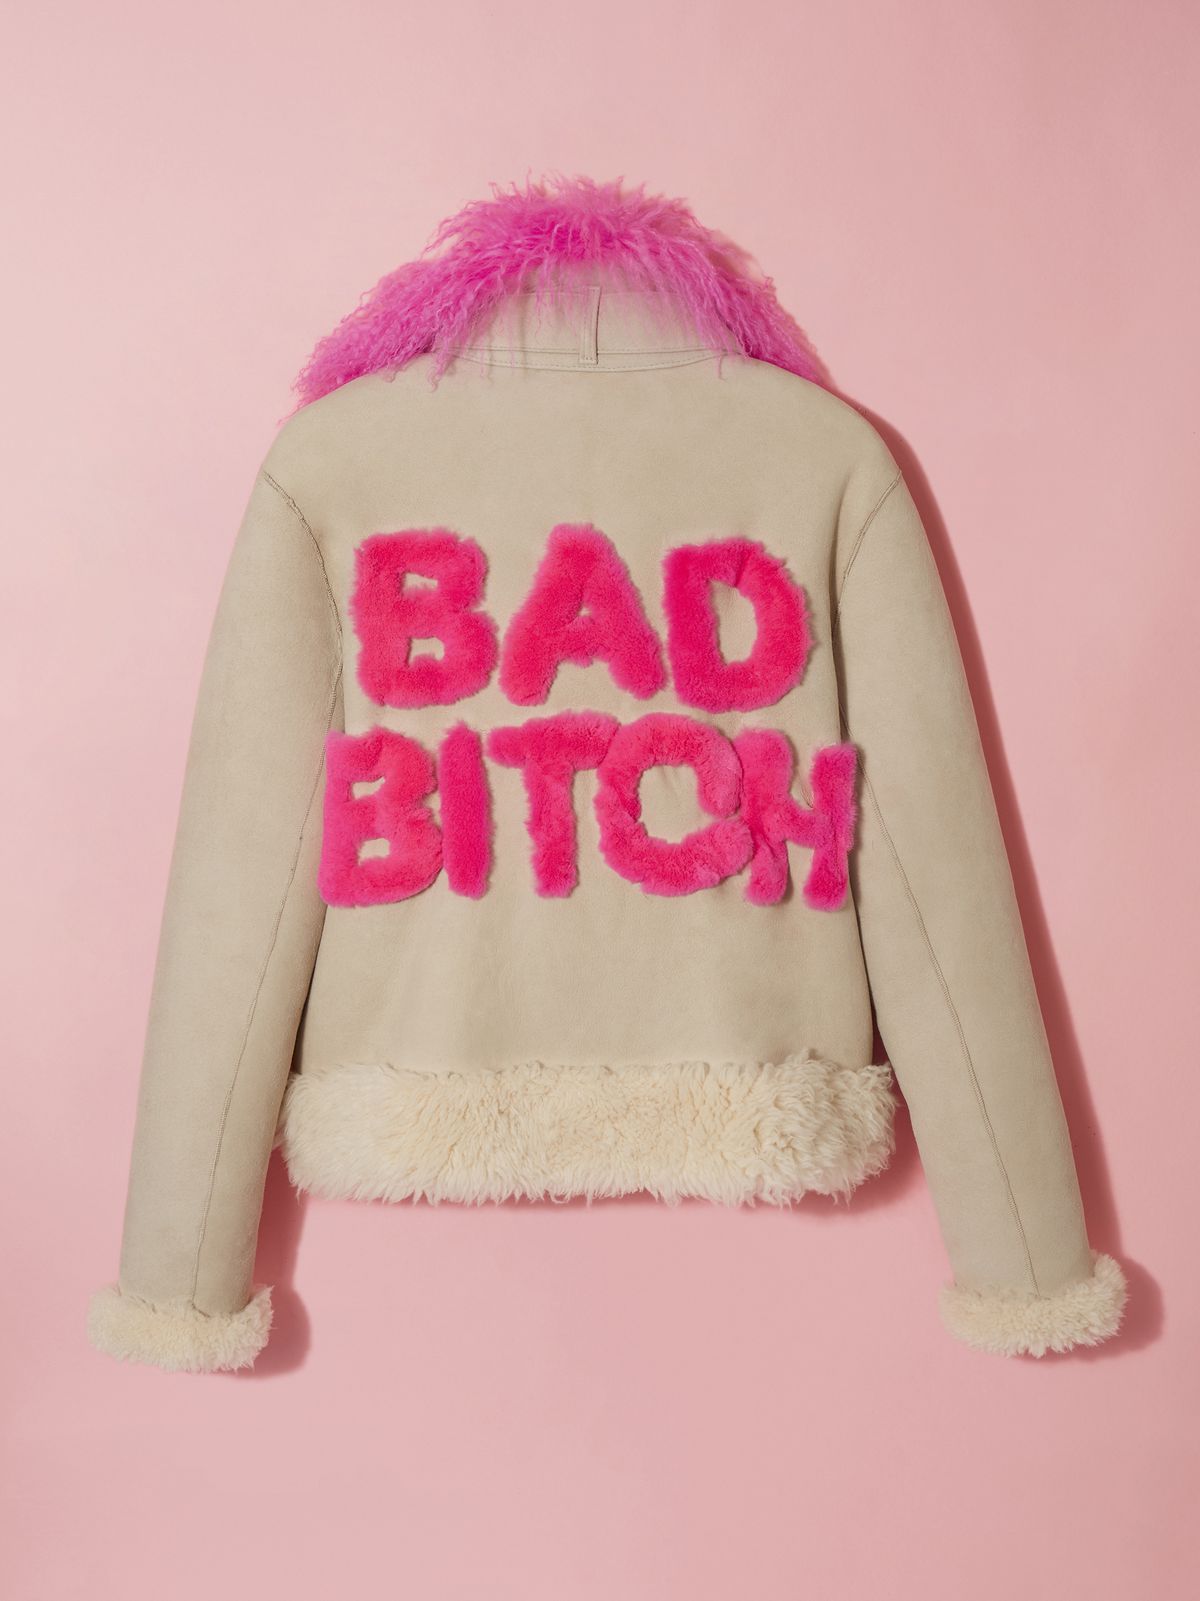 Bebe Rexha x Gilt Shearling Jacket, $4,800